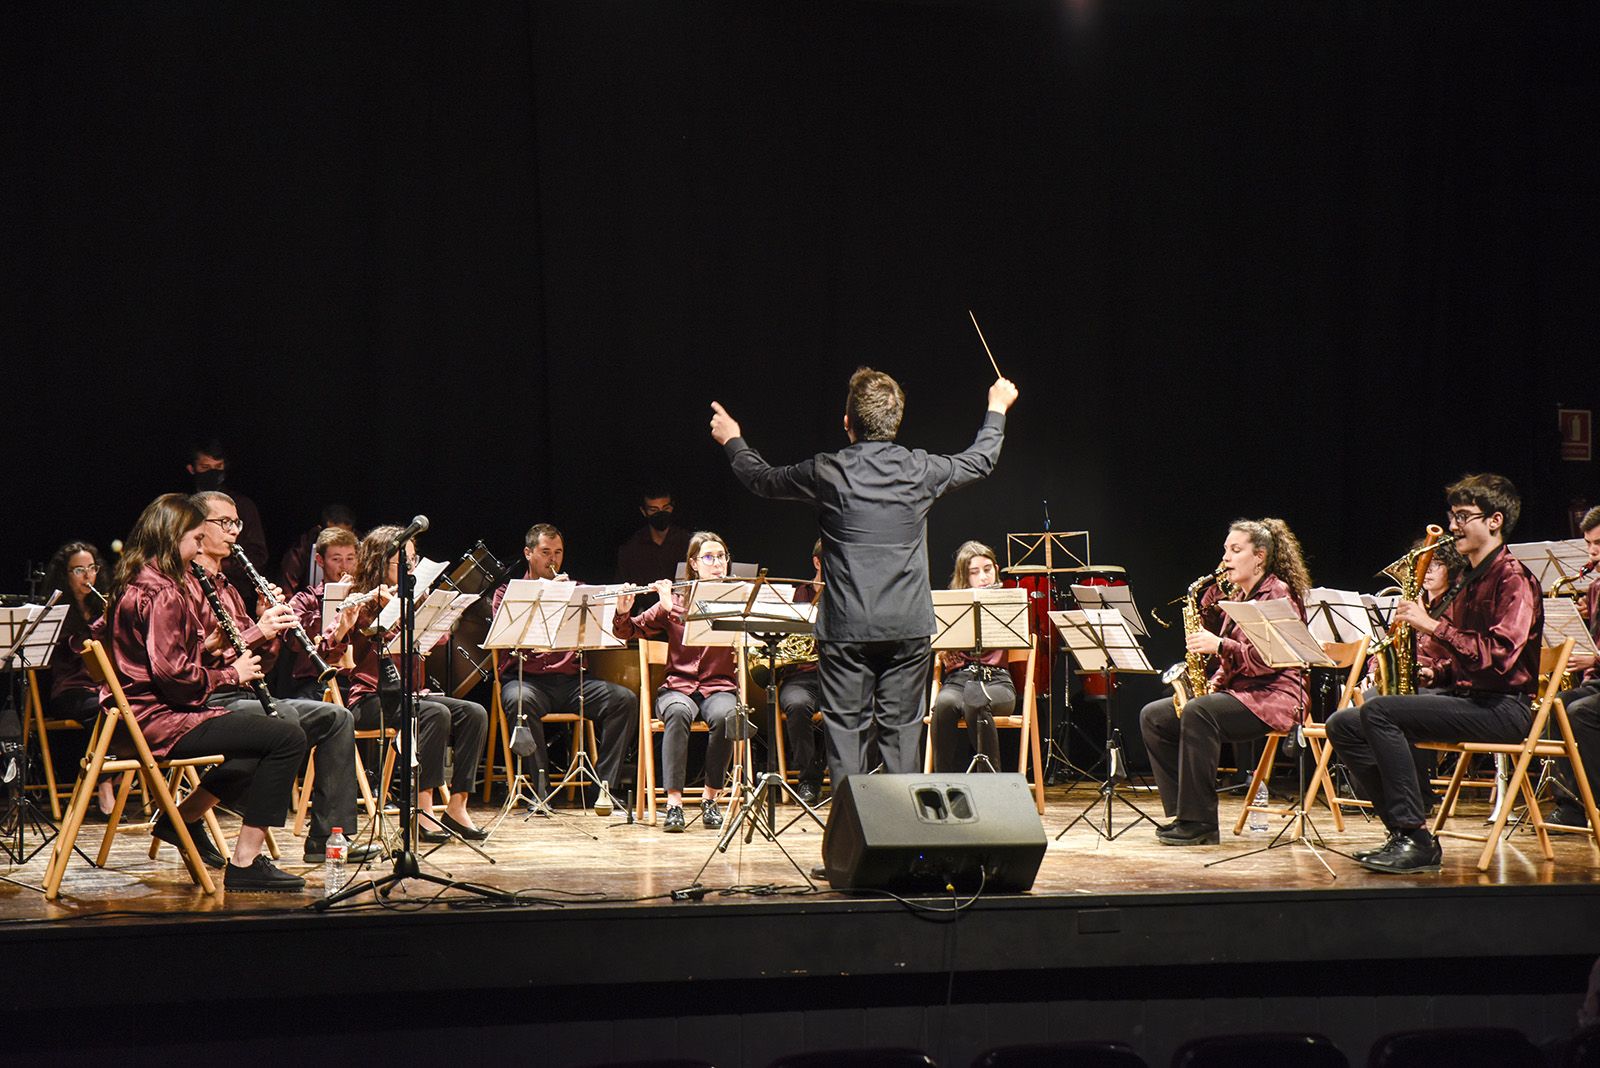 Concert Agrupació musical. Foto: Bernat Millet.